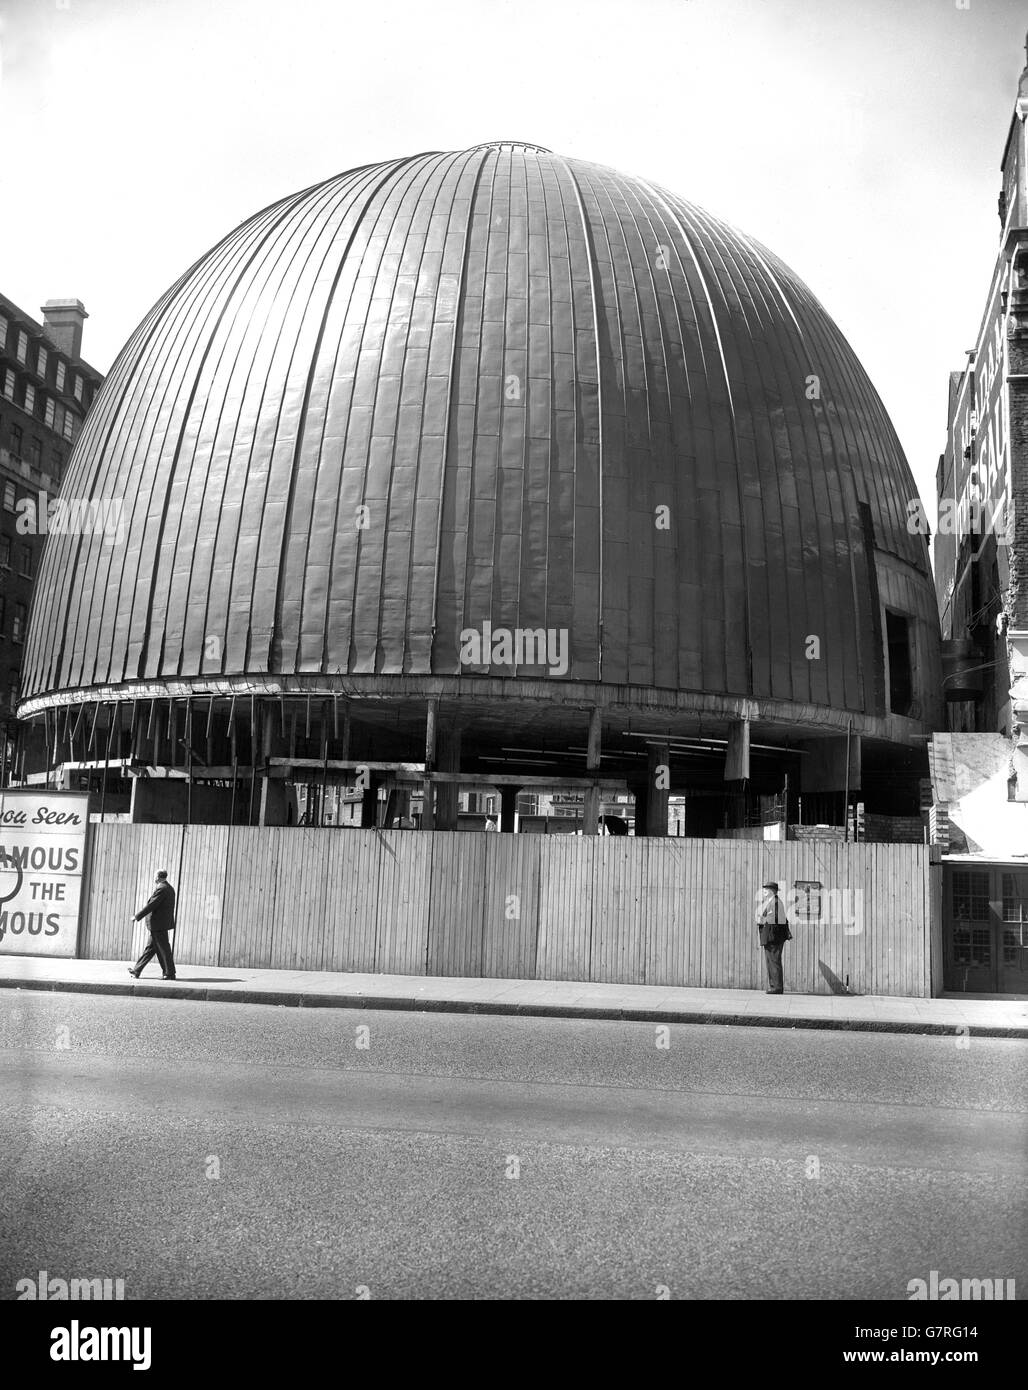 Edifici - London Planetarium - Marylebone Road Foto Stock